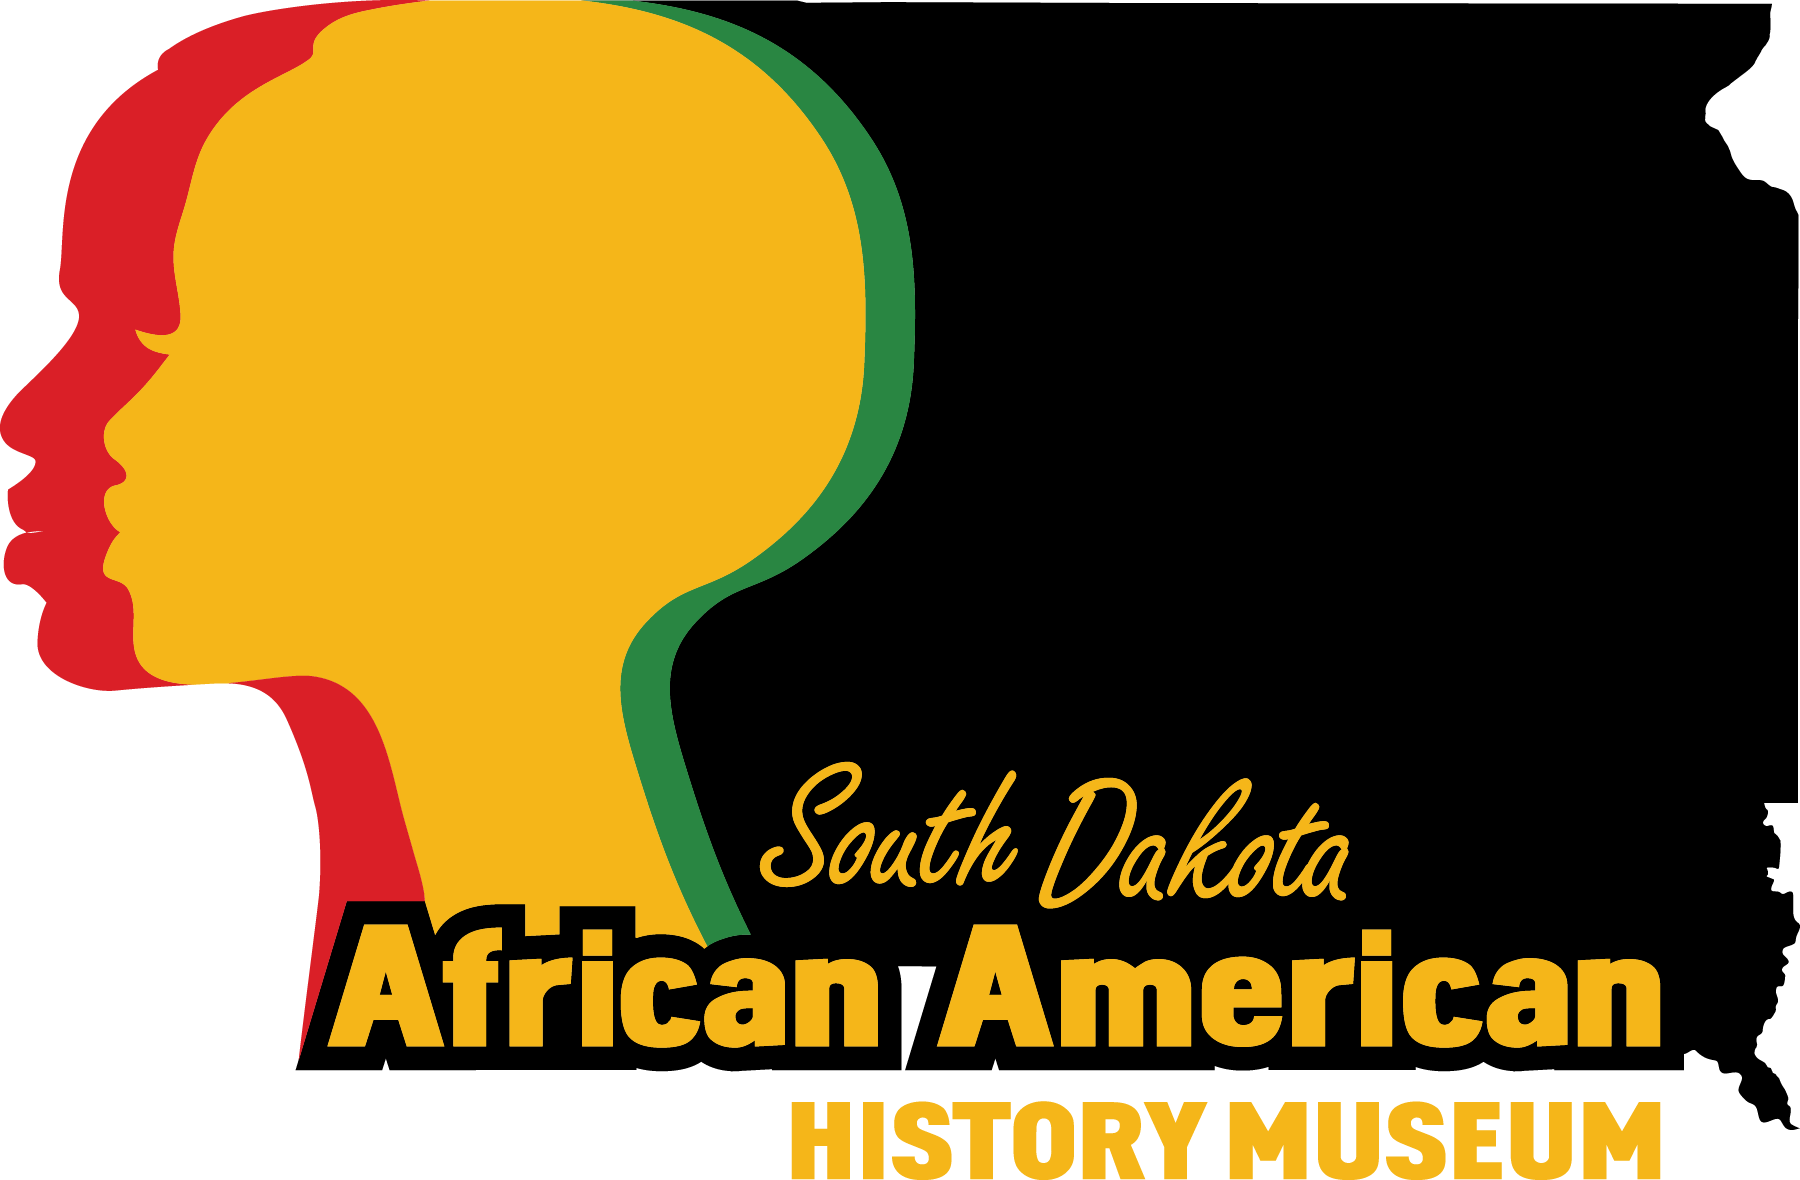 South Dakota African American History Museum